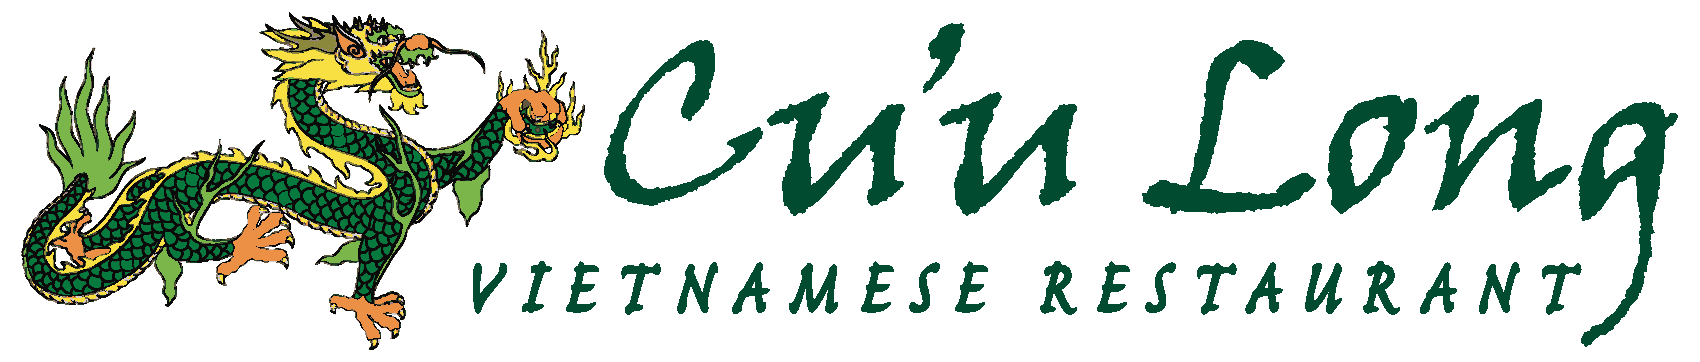 Cuu Long Nine Dragon River Vietnamese Restaurant - logo